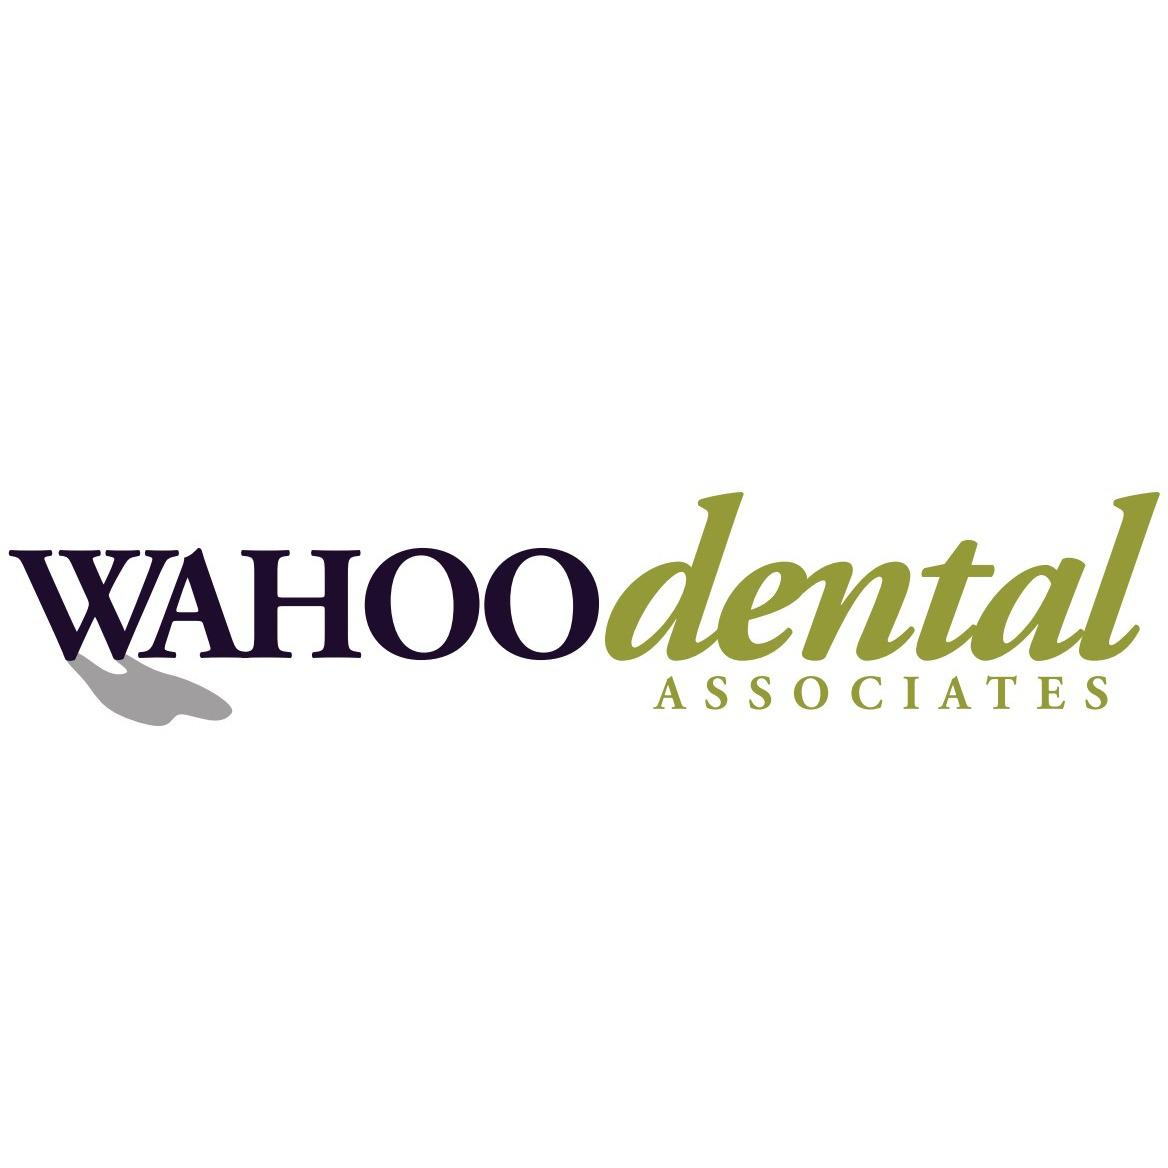 Wahoo Dental Associates - Wahoo, NE 68066 - (402)443-5959 | ShowMeLocal.com